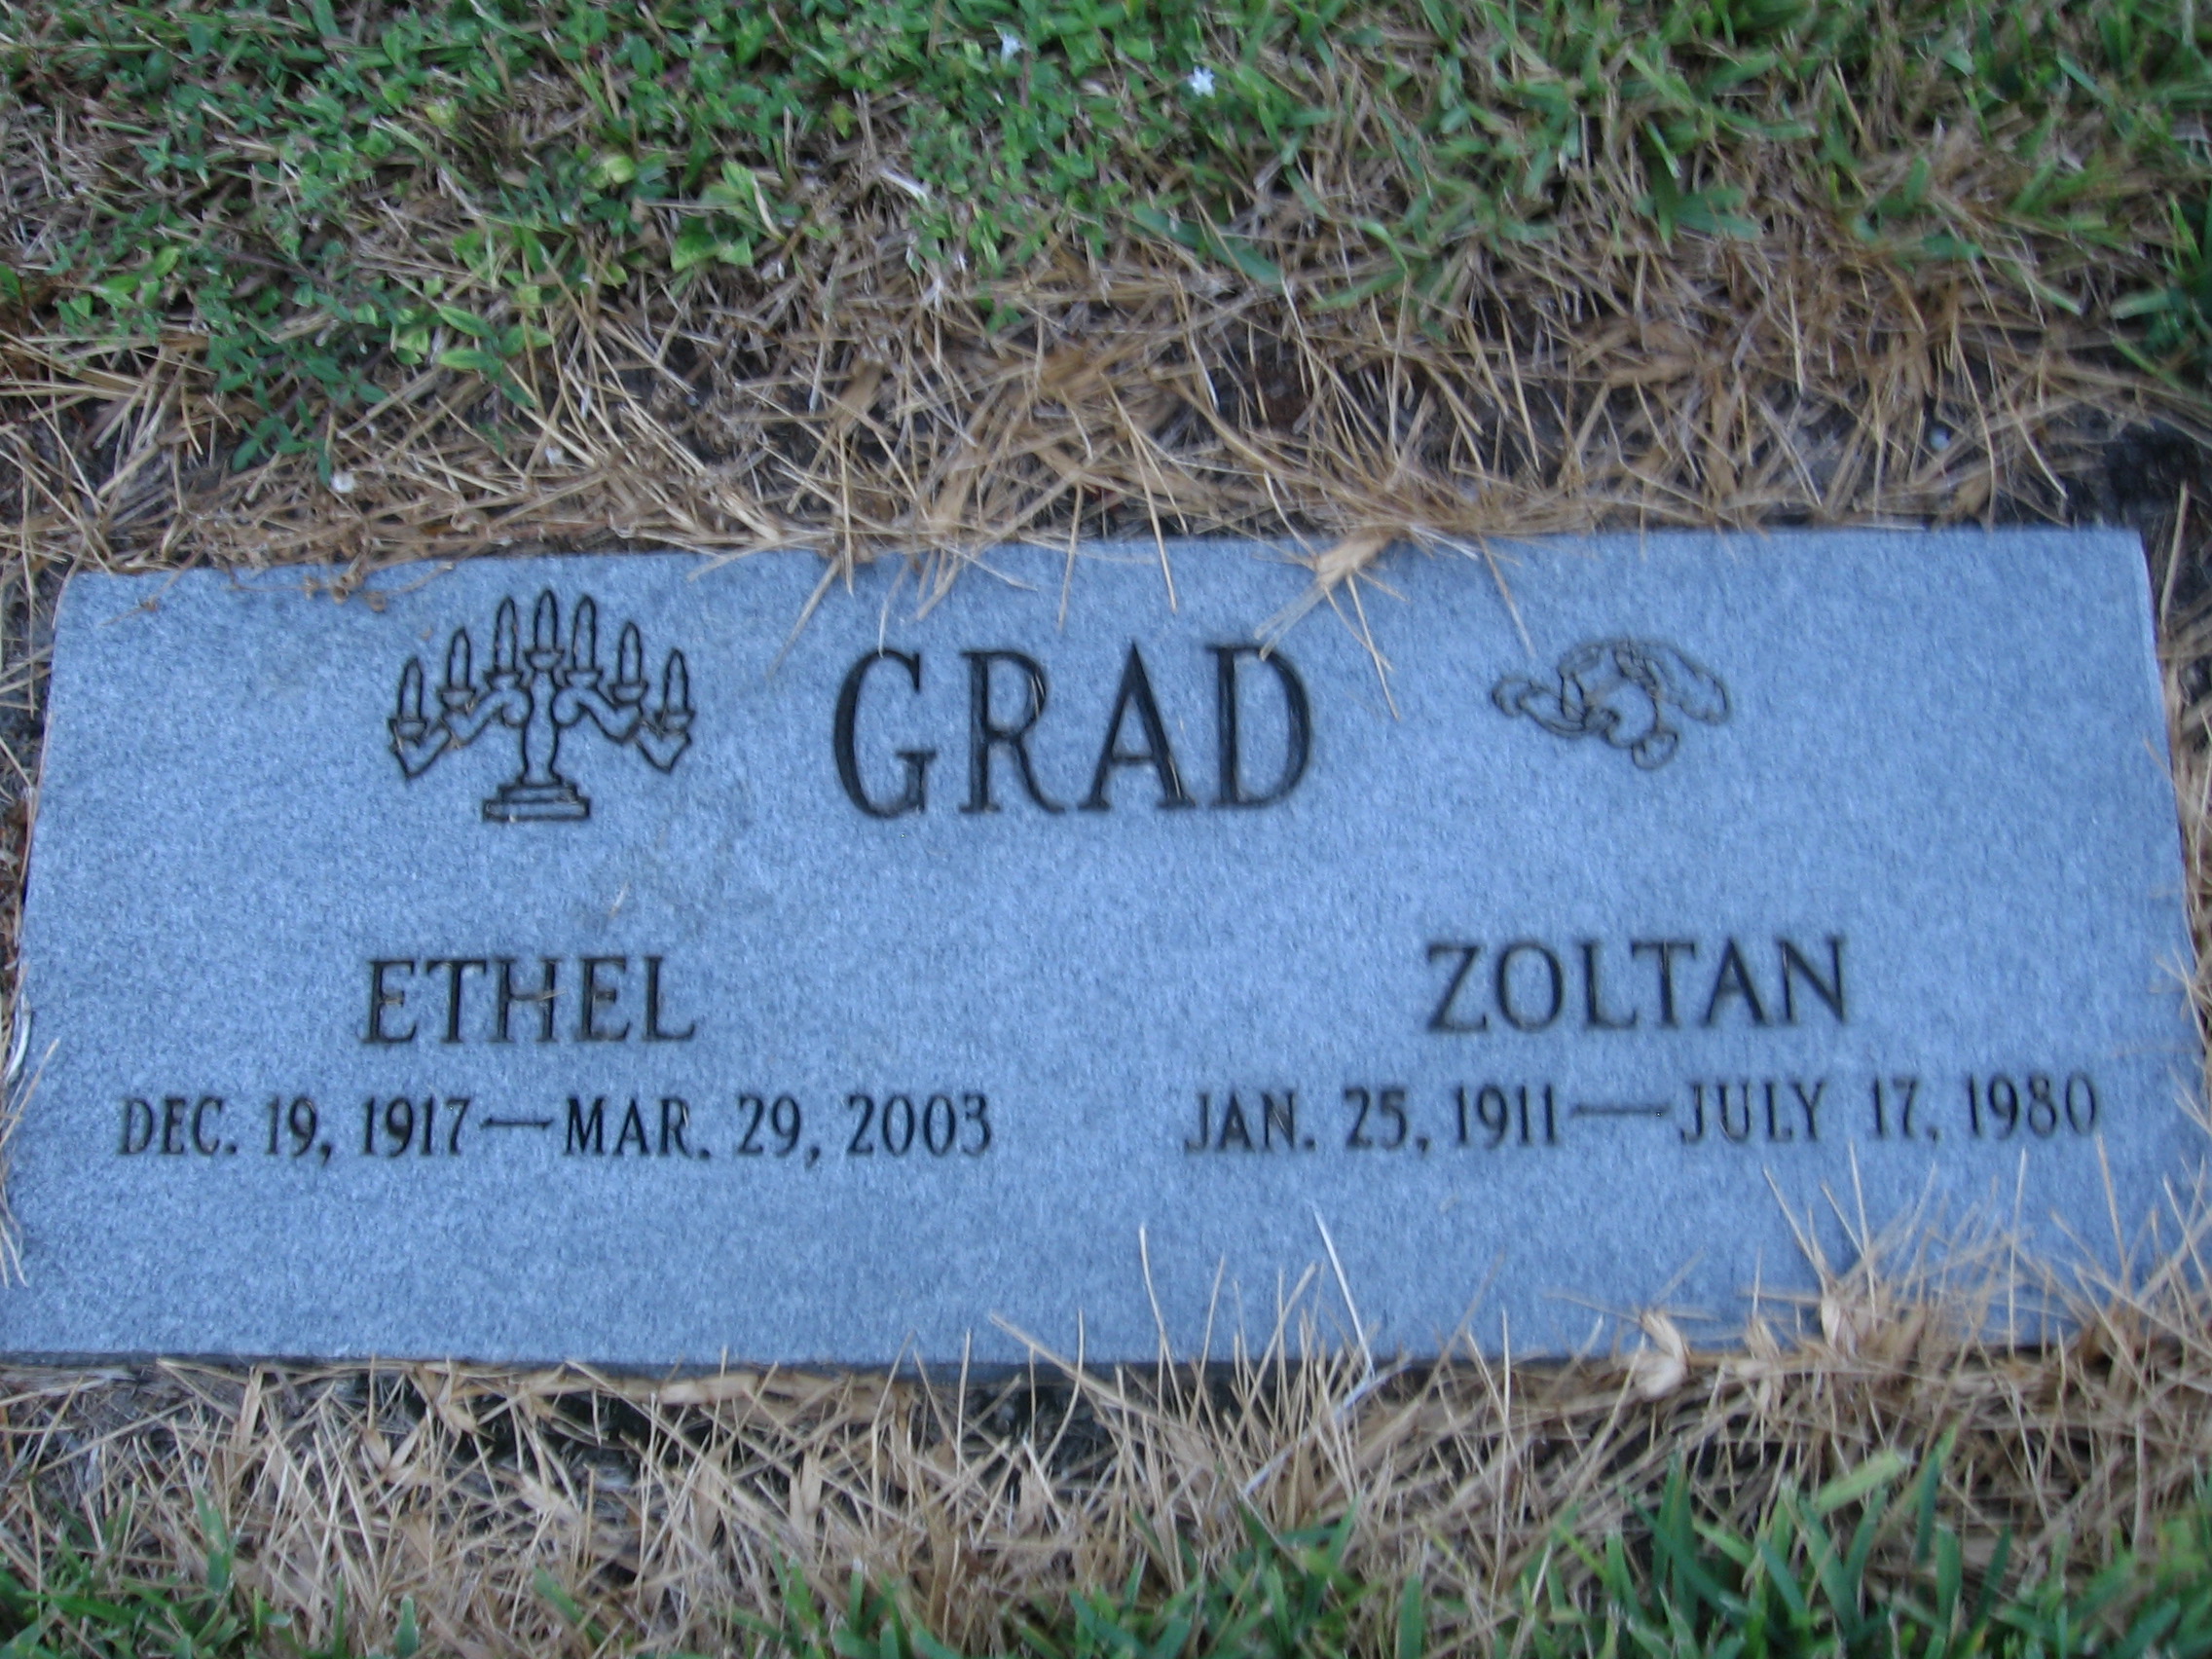 Ethel Grad